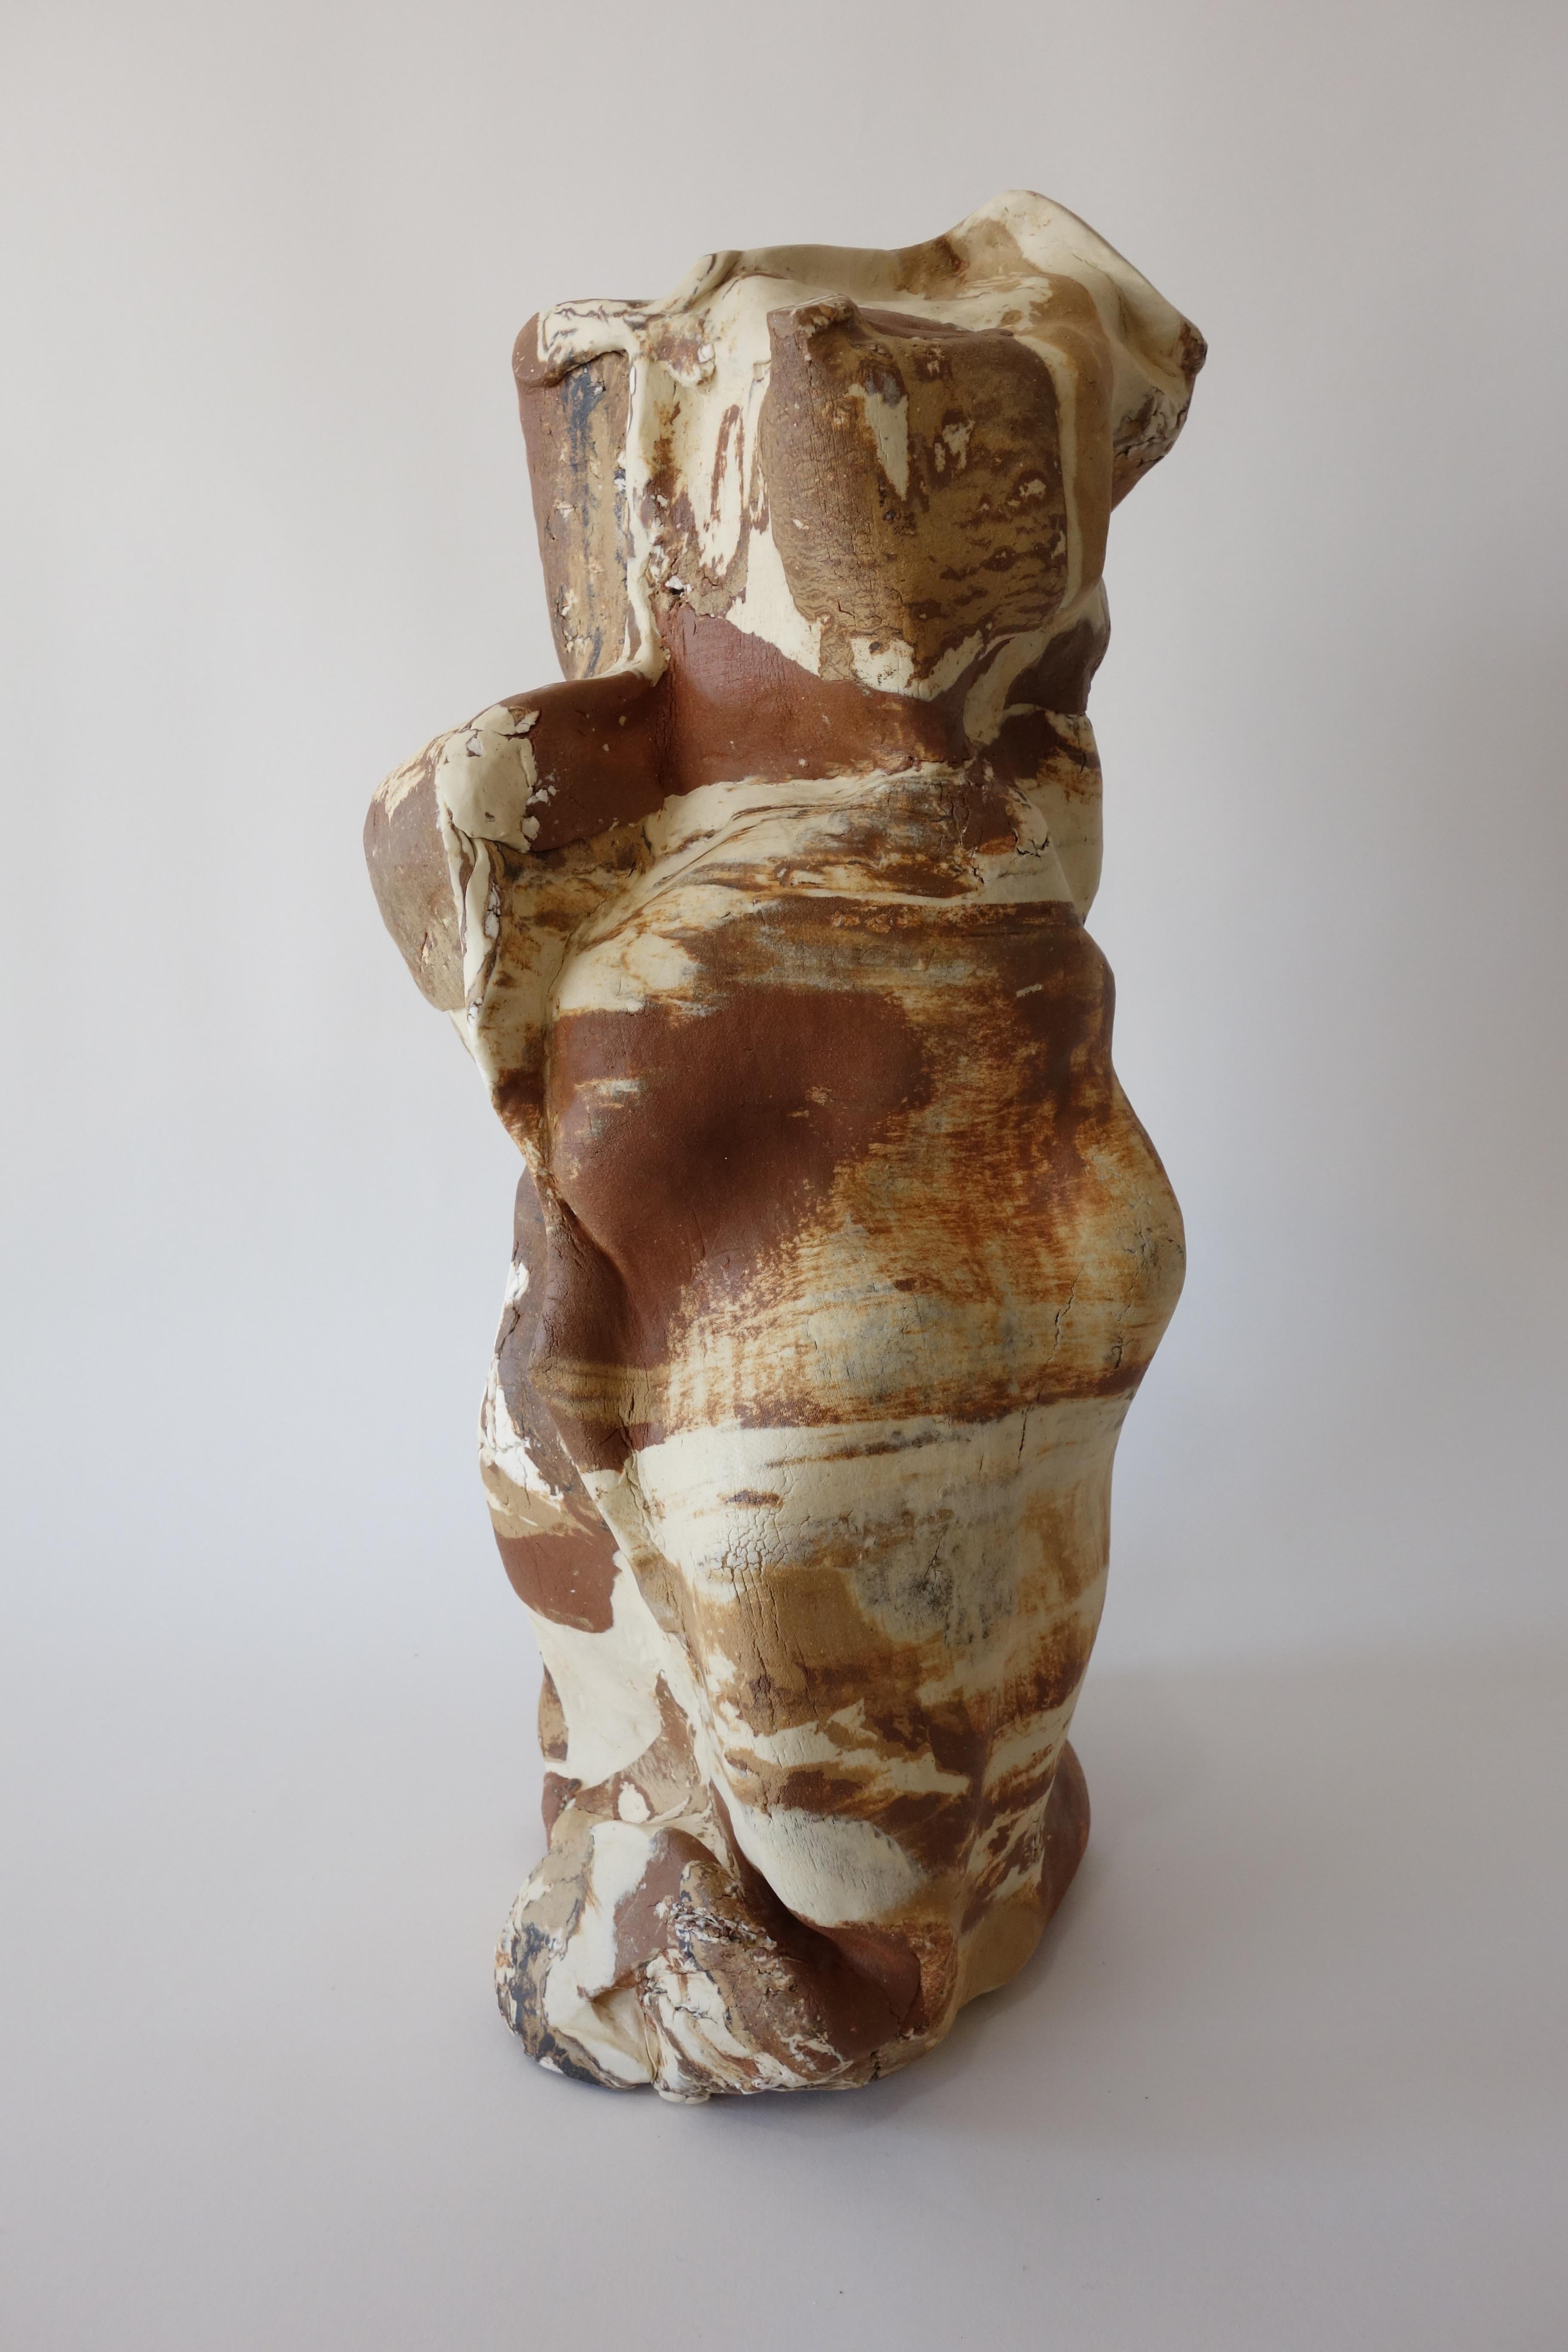 NOR Hug - Sculpture by Anna Bush Crews